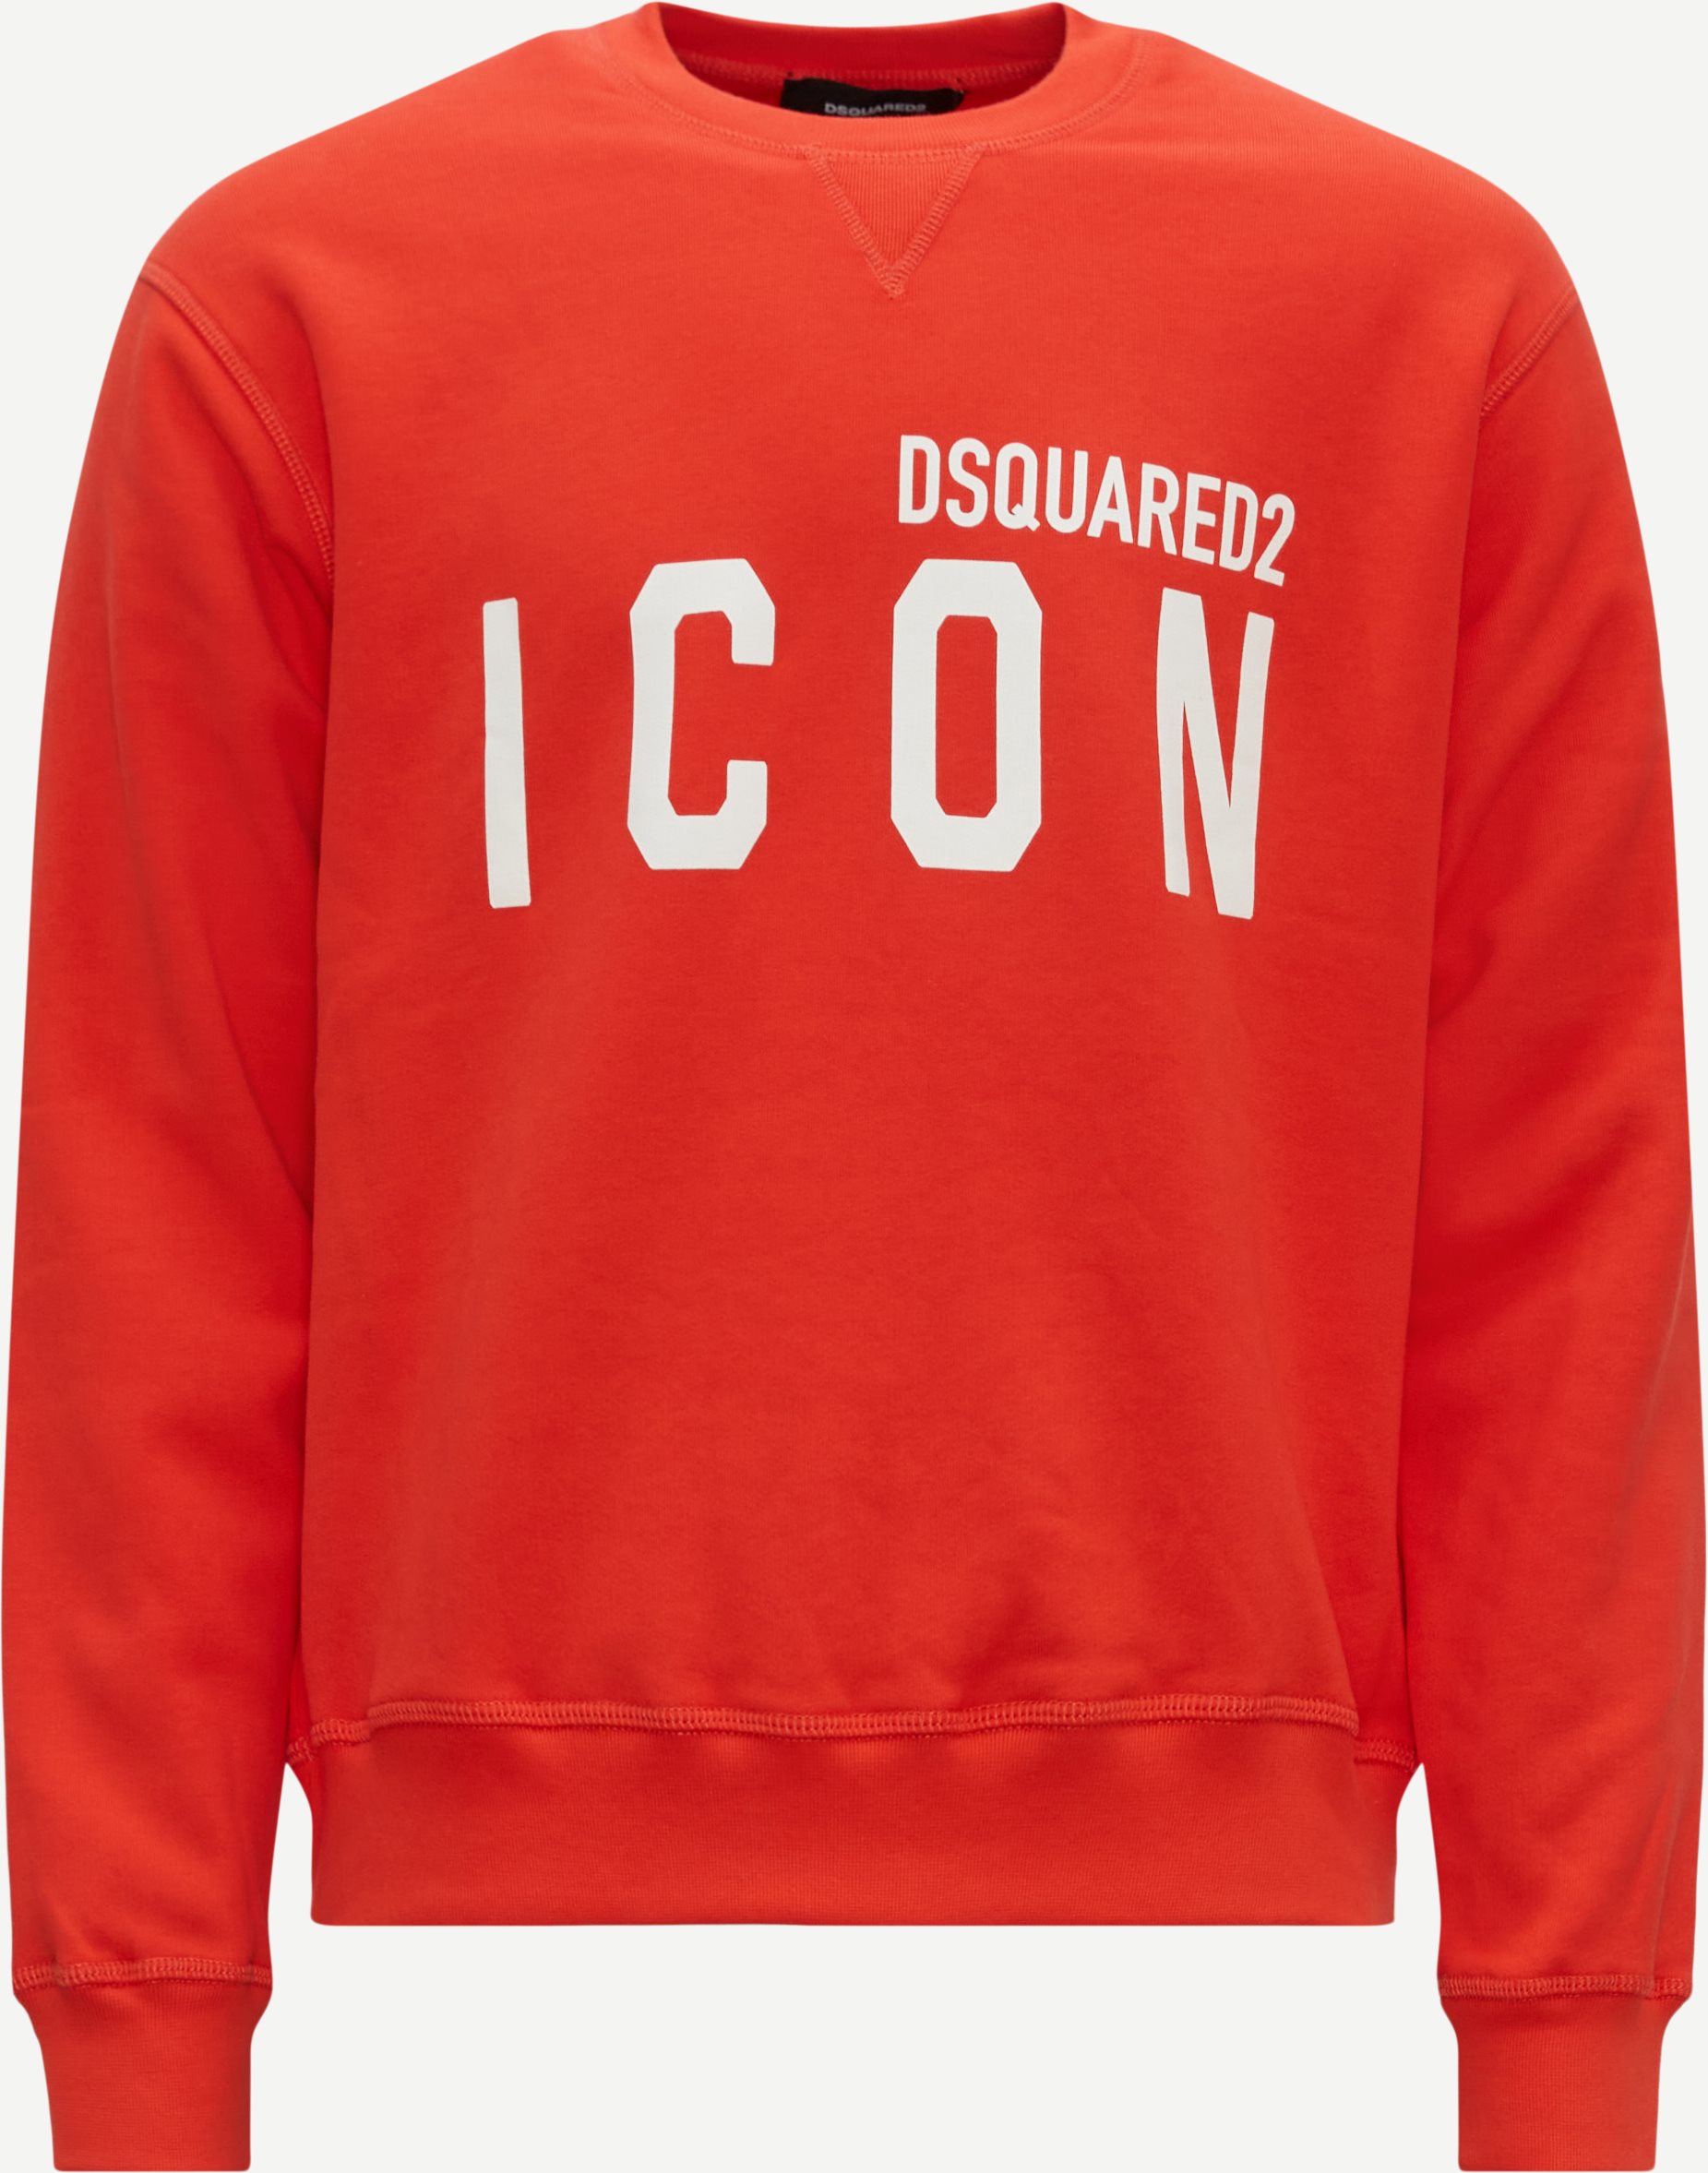 Dsquared2 Sweatshirts S79GU004 S25516 CREW Red